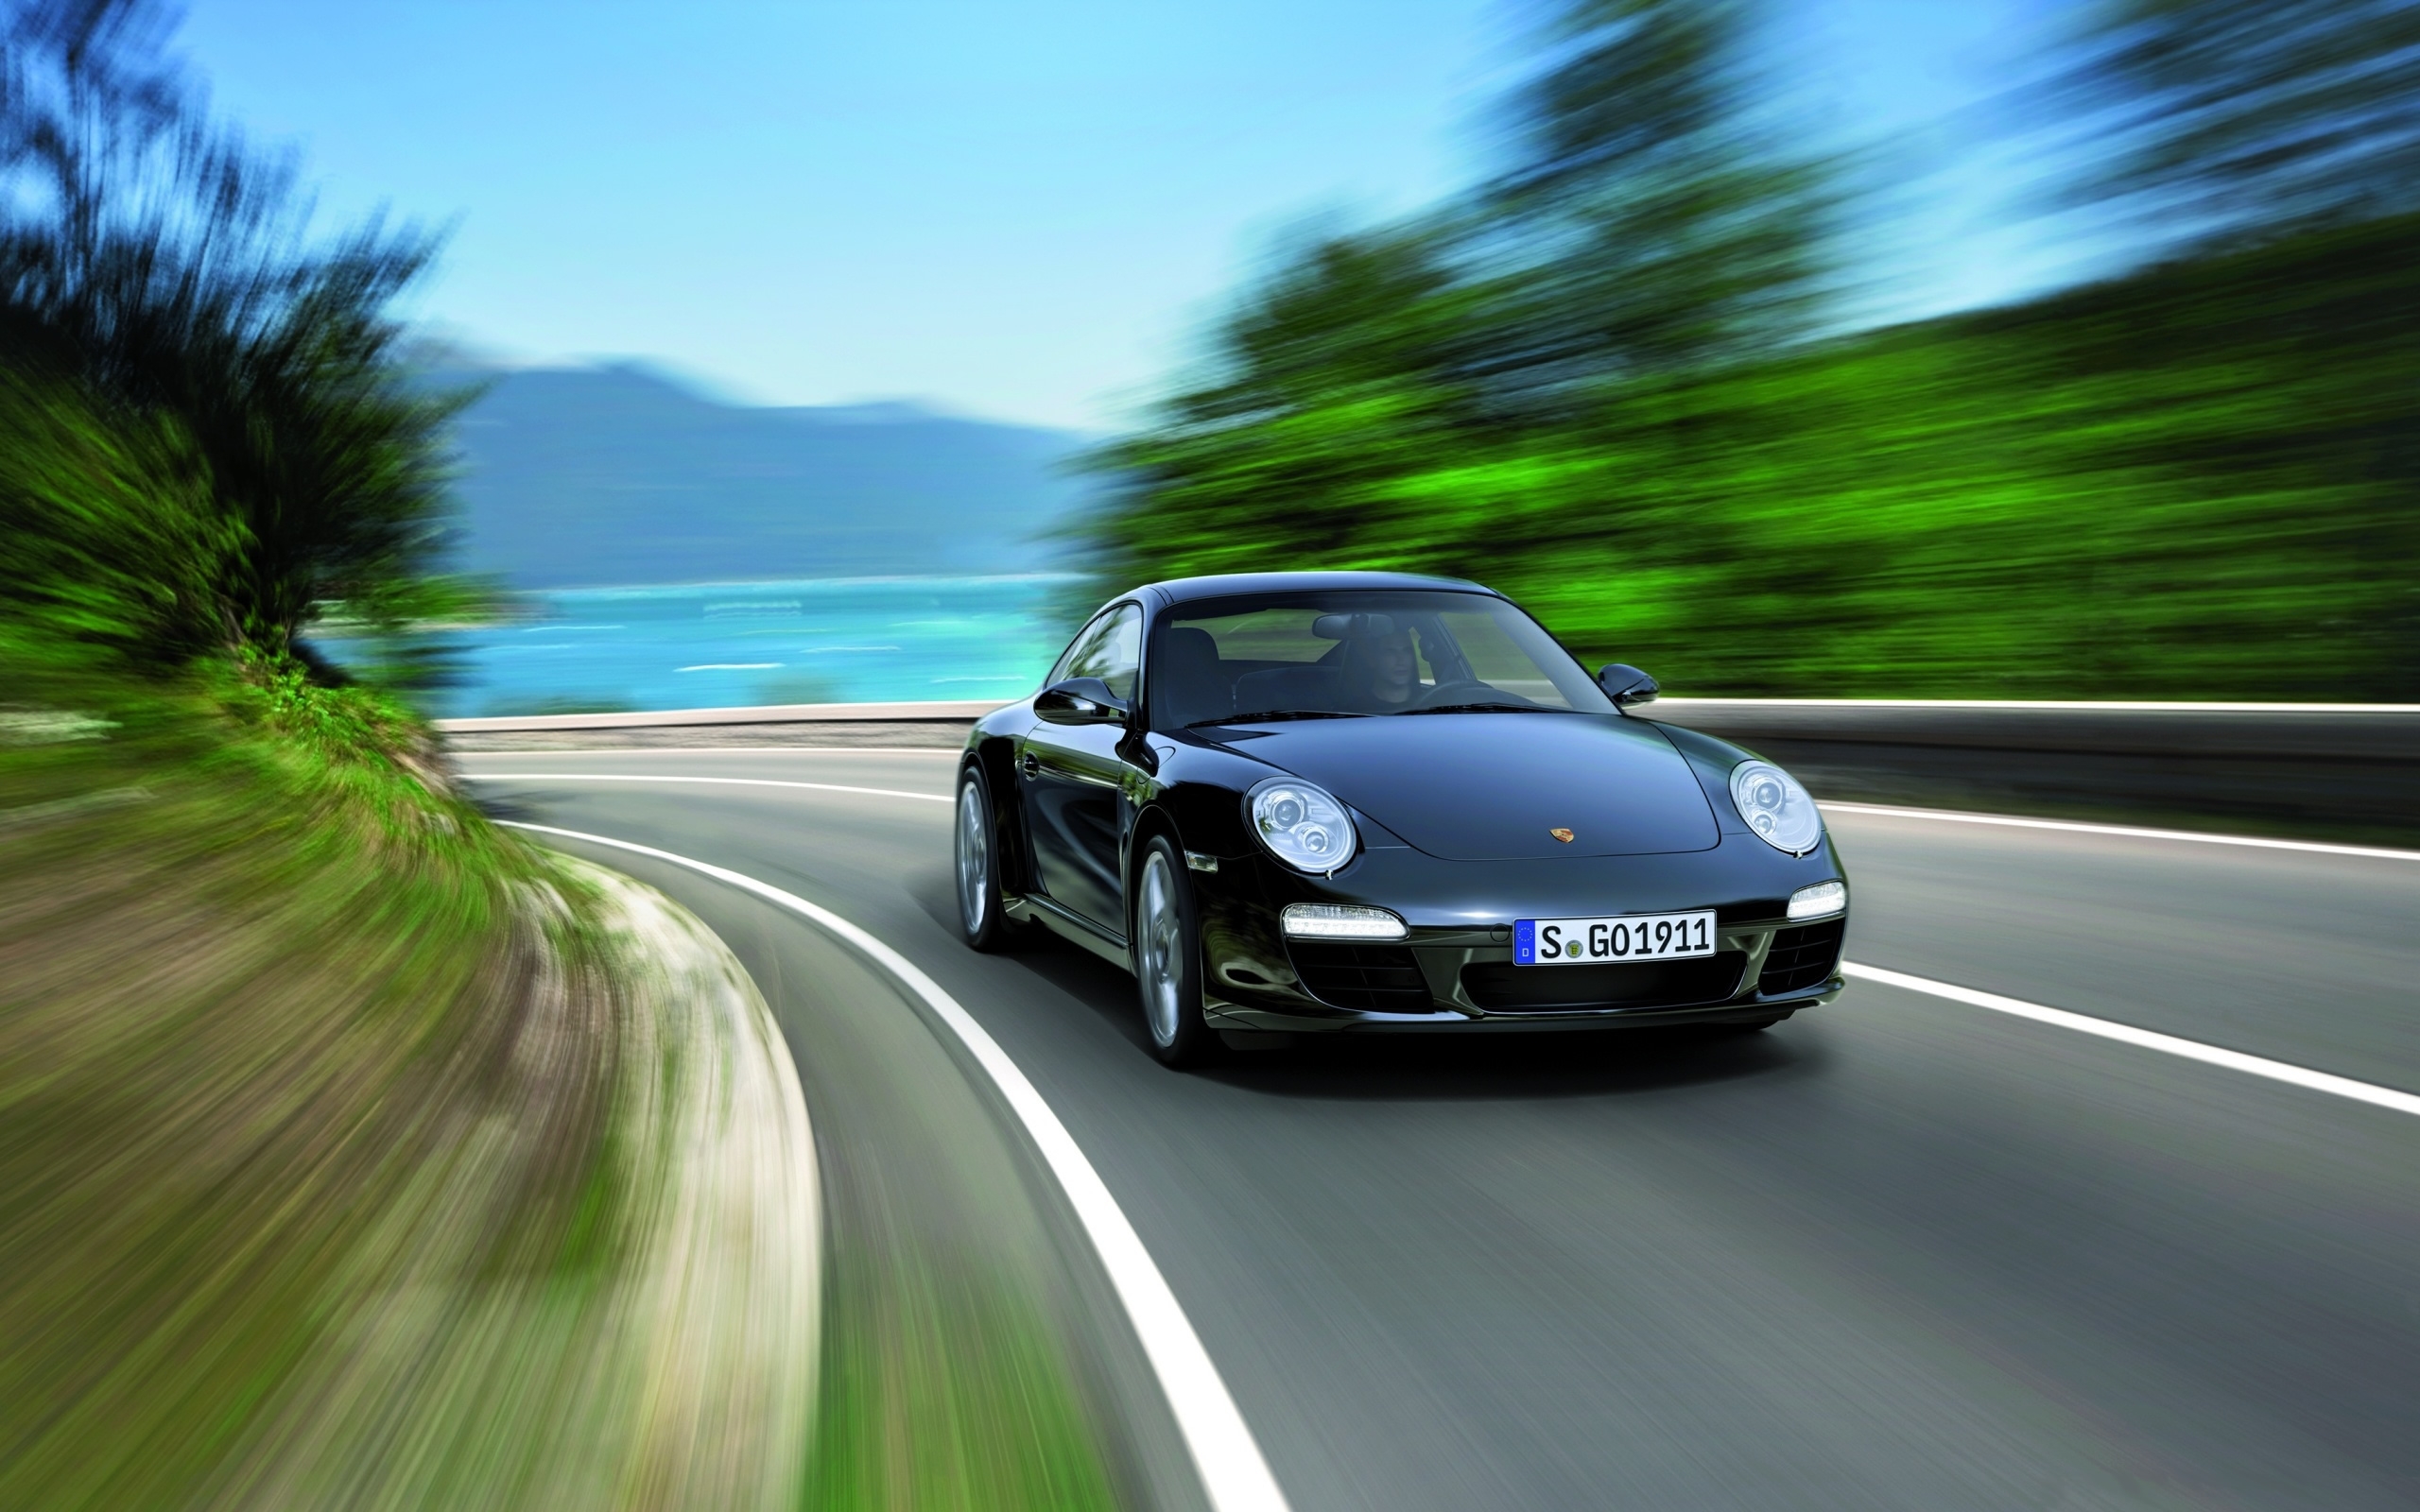 2011 Black Porsche 911 Black Edition Macbook Air Wallpaper Download Allmacwallpaper